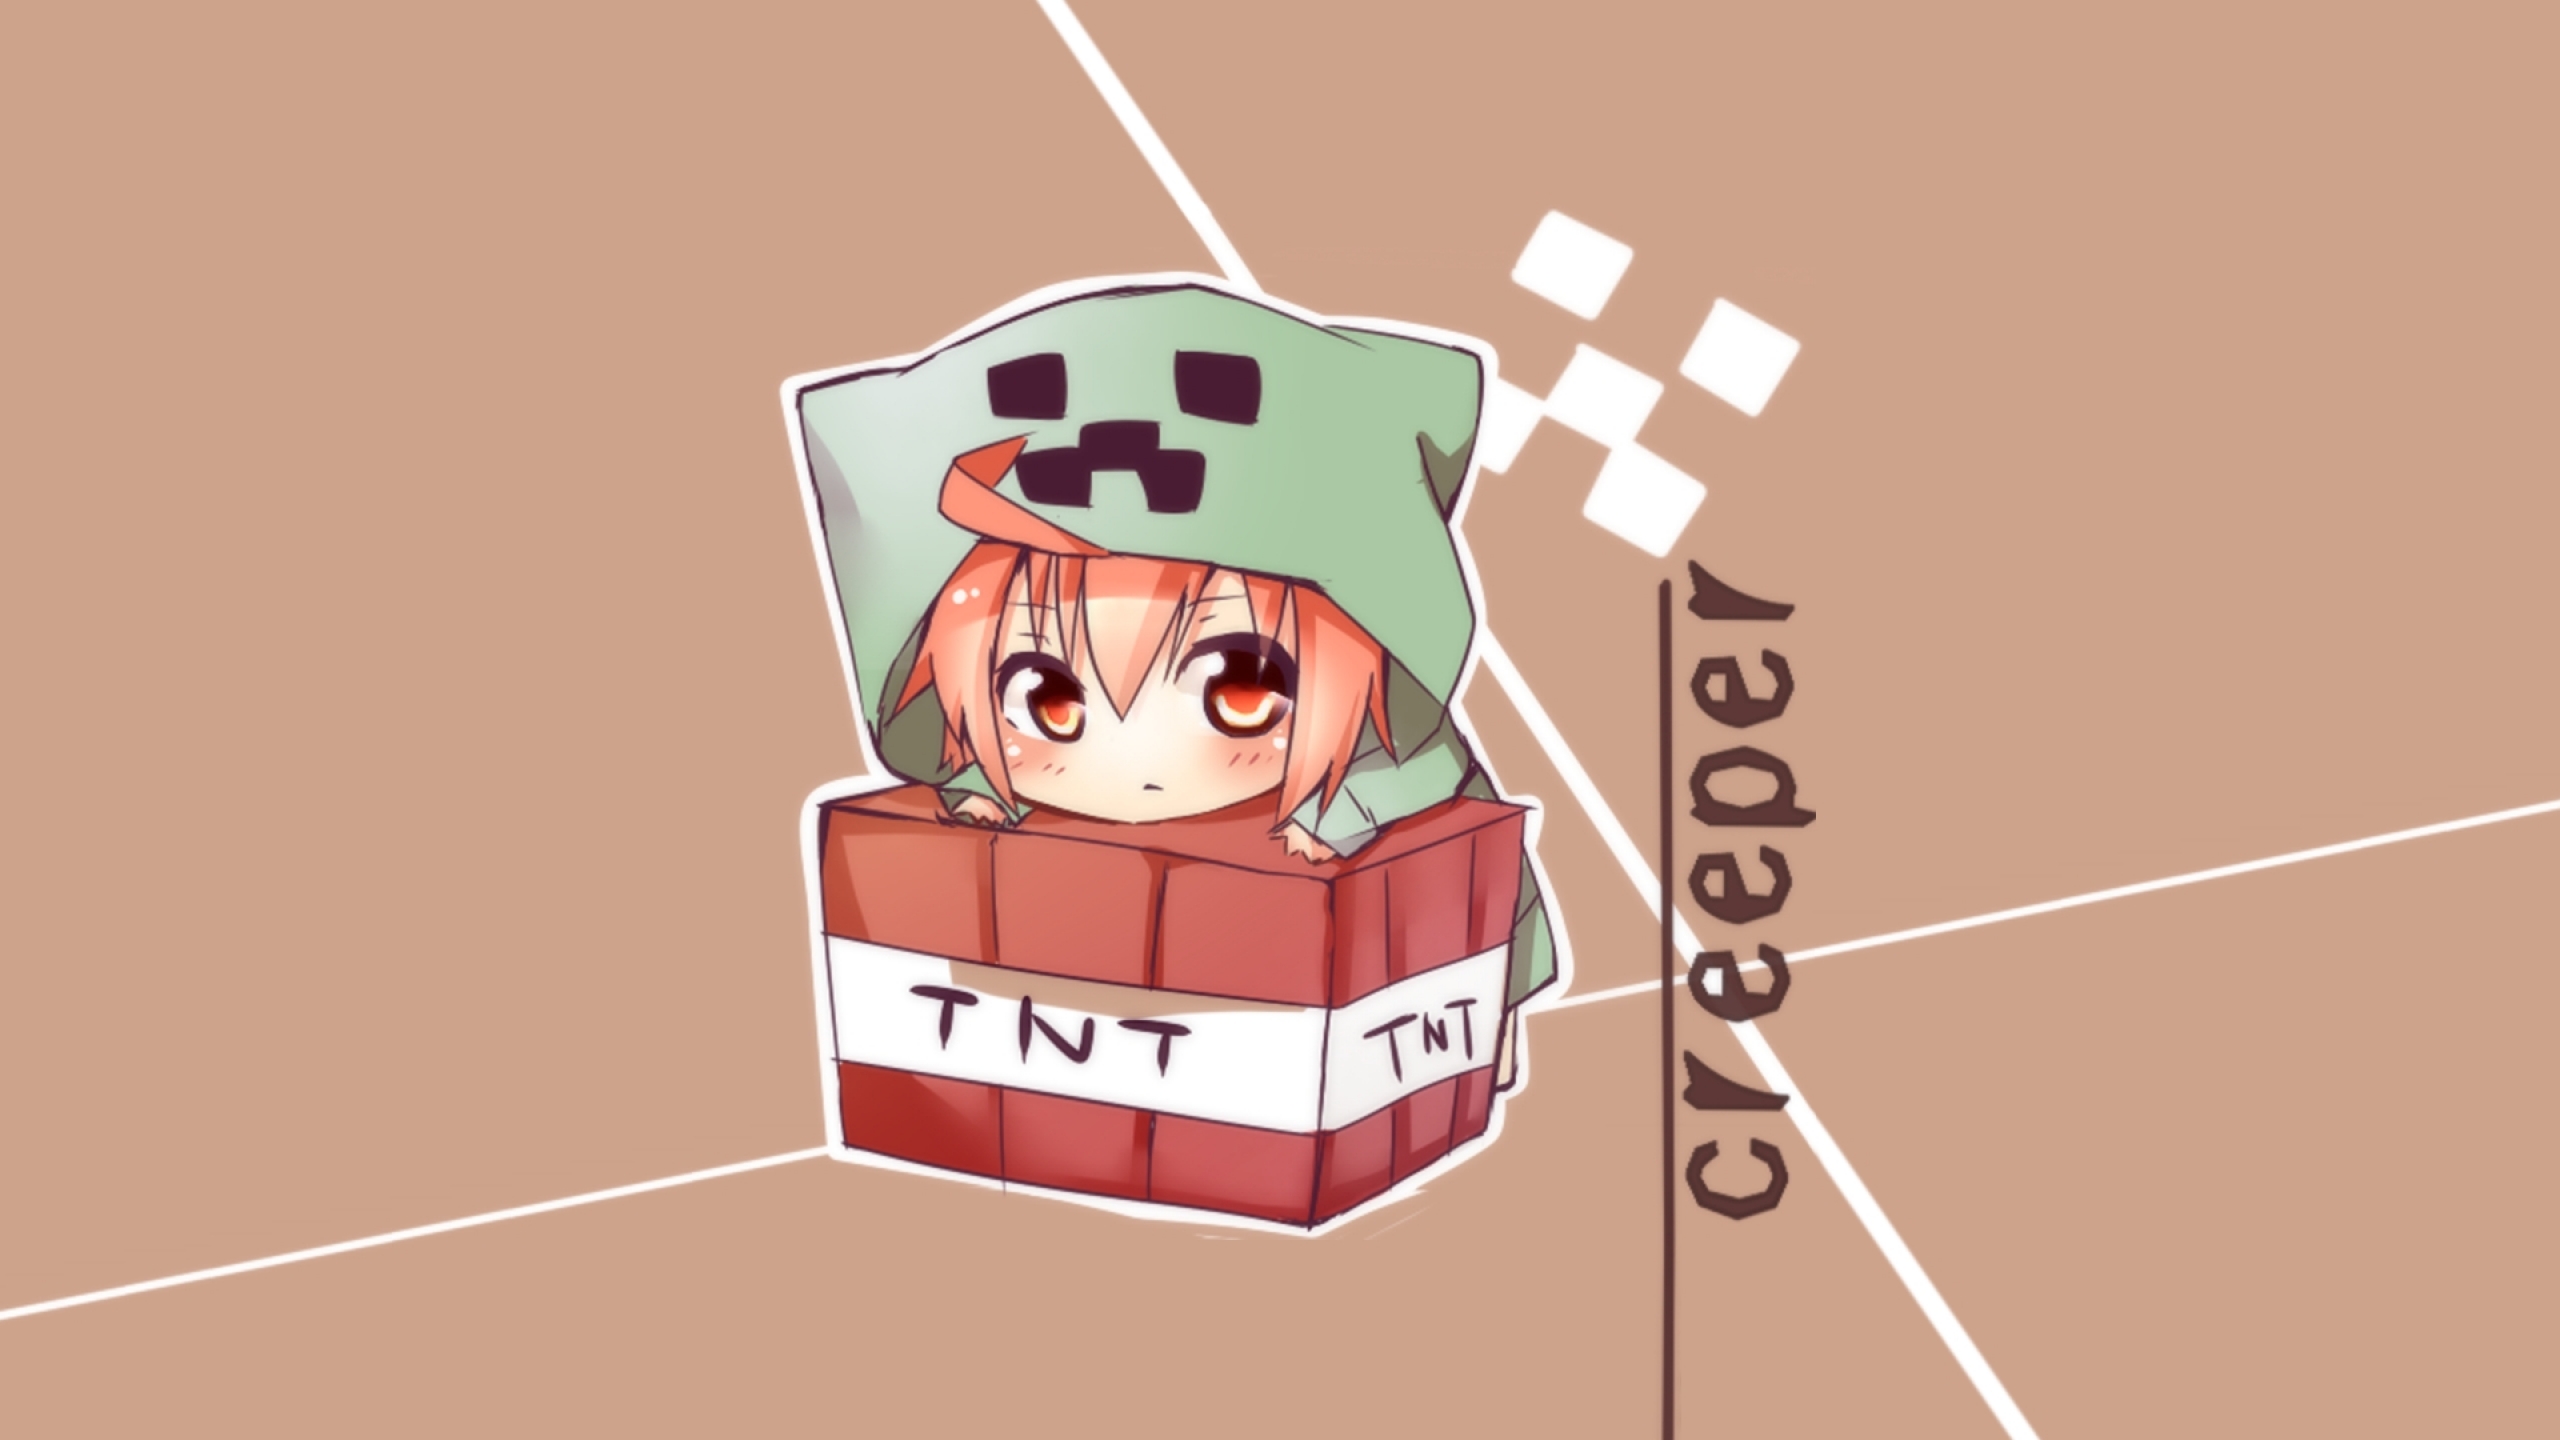 Wallpaper Creeper Minecraft Anime Tnt